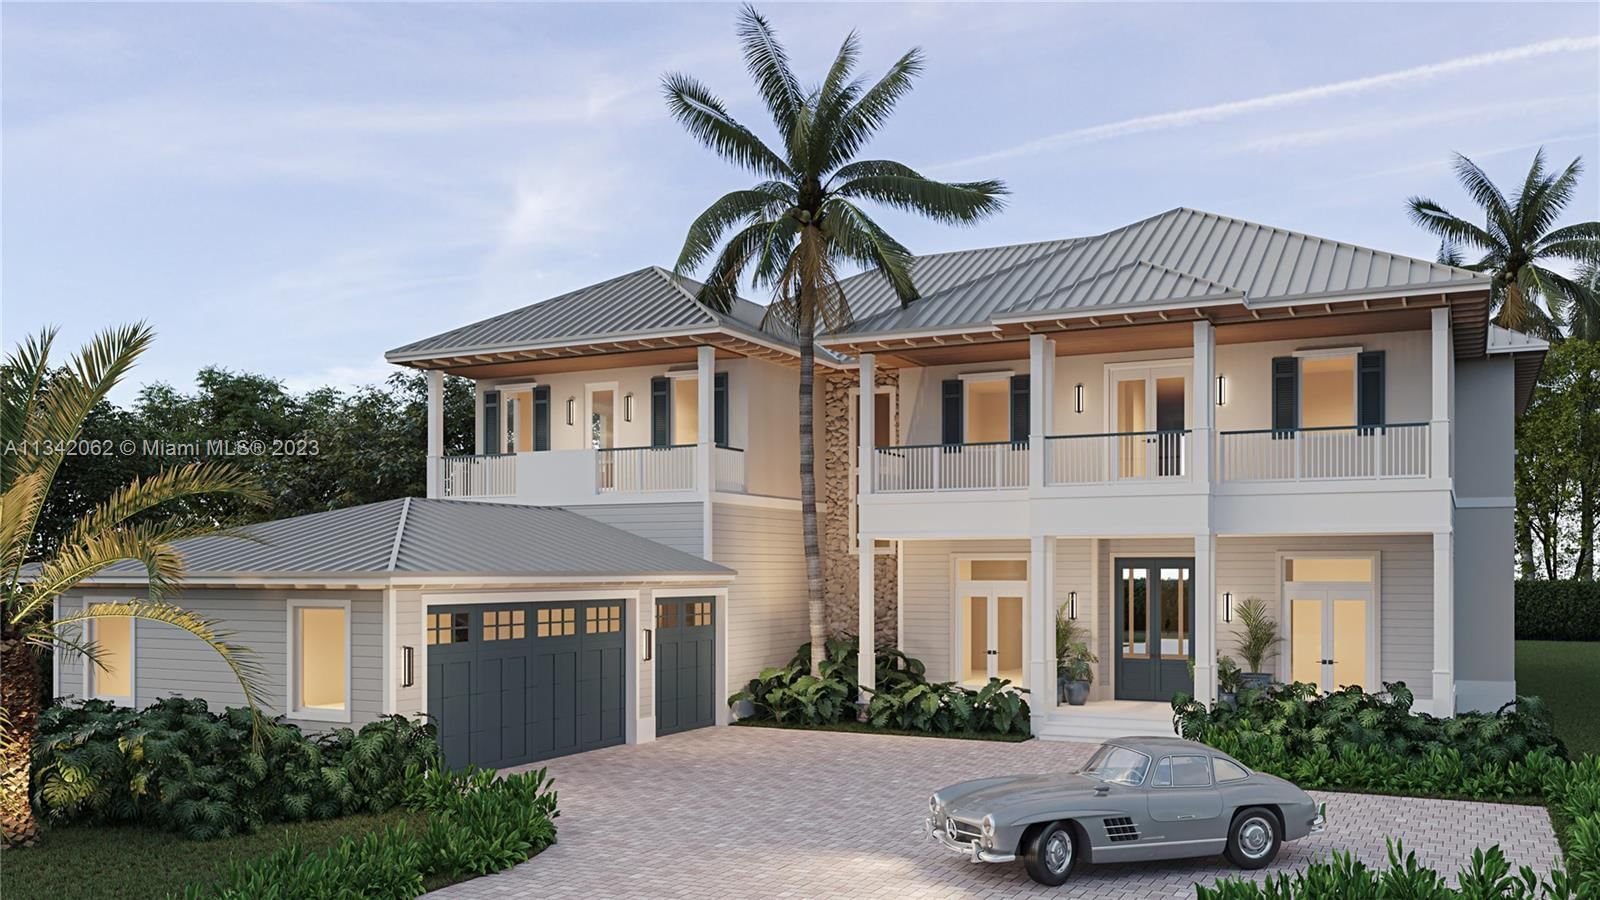 Real estate property located at 5280 80th St, Miami-Dade County, Miami, FL